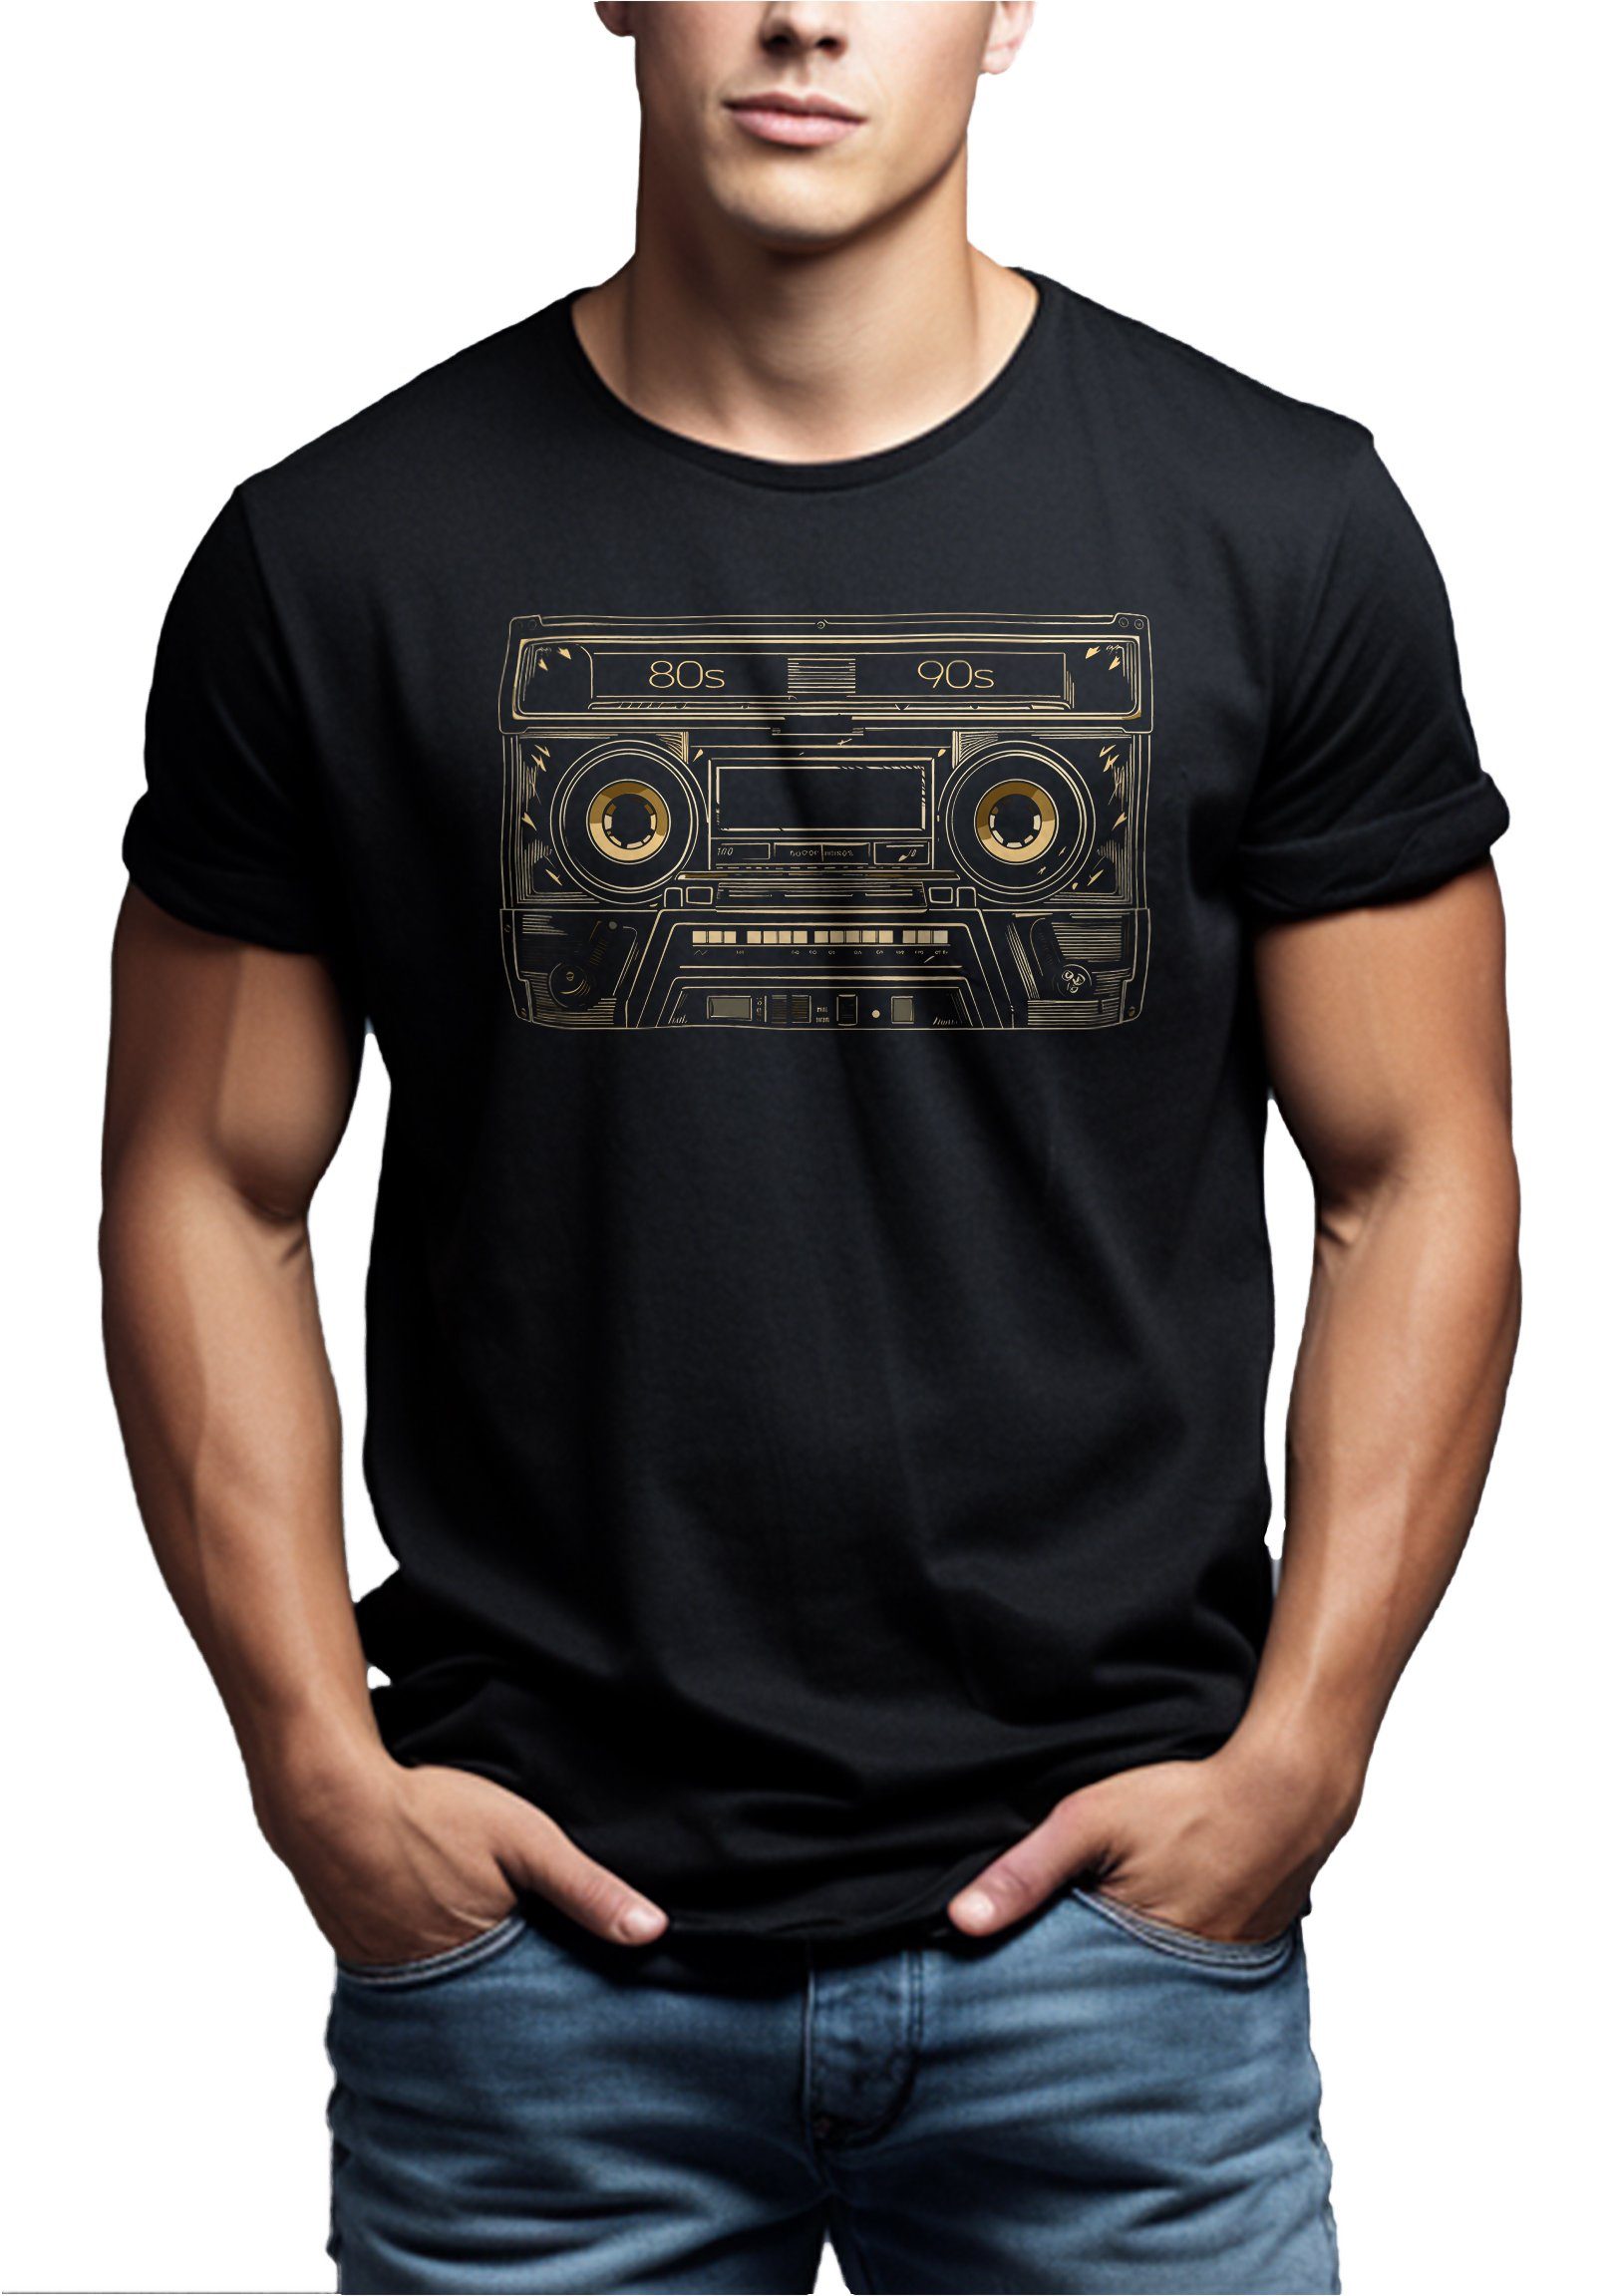 MAKAYA T-Shirt für Jungs Hip Hop Schwarz Coole Jugendliche Retro Motiv Herren, Jungen Kassette Outfits